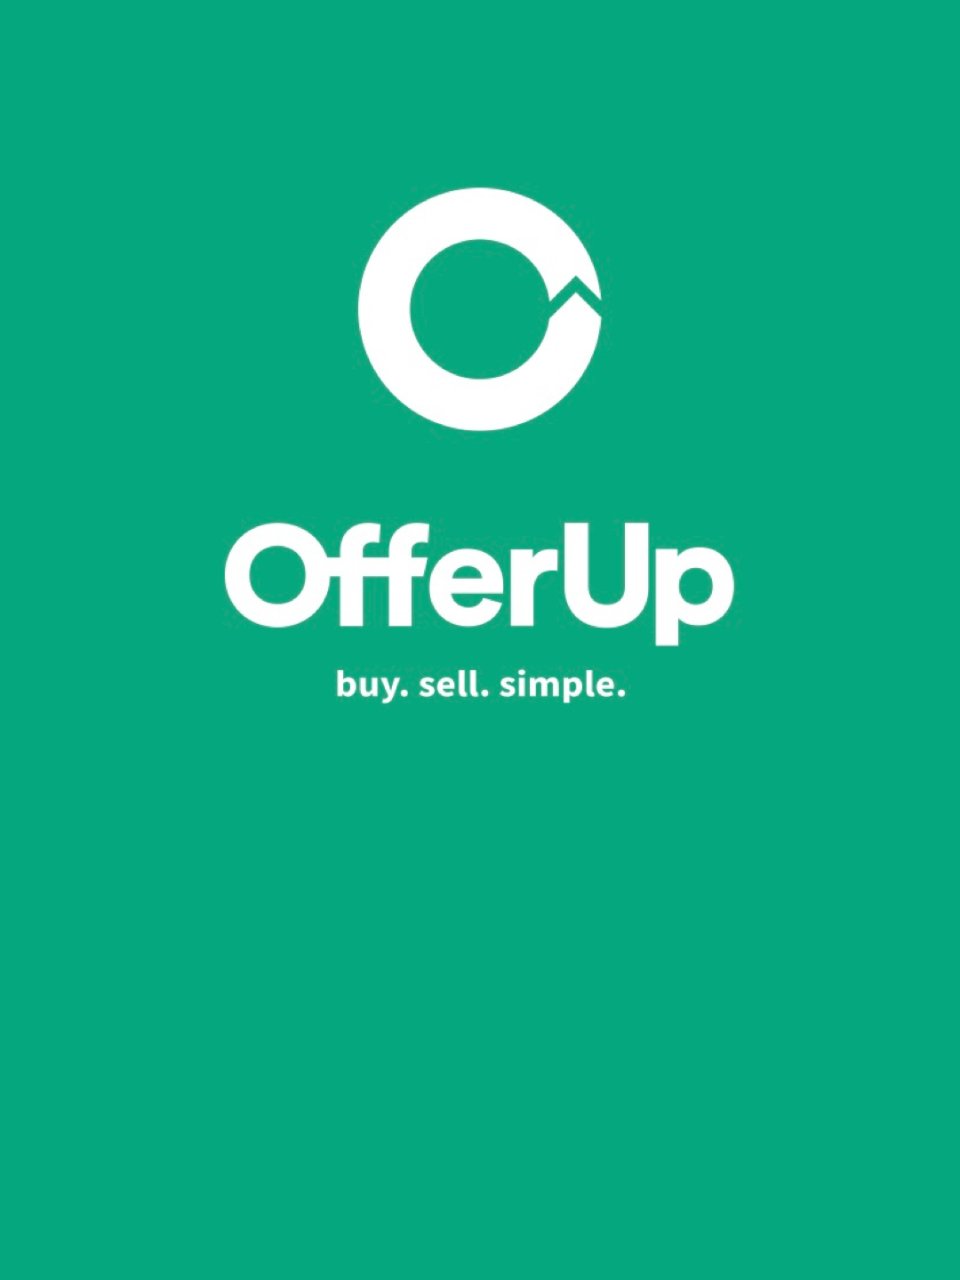 OfferUp 新的一年终于把大件卖出去...